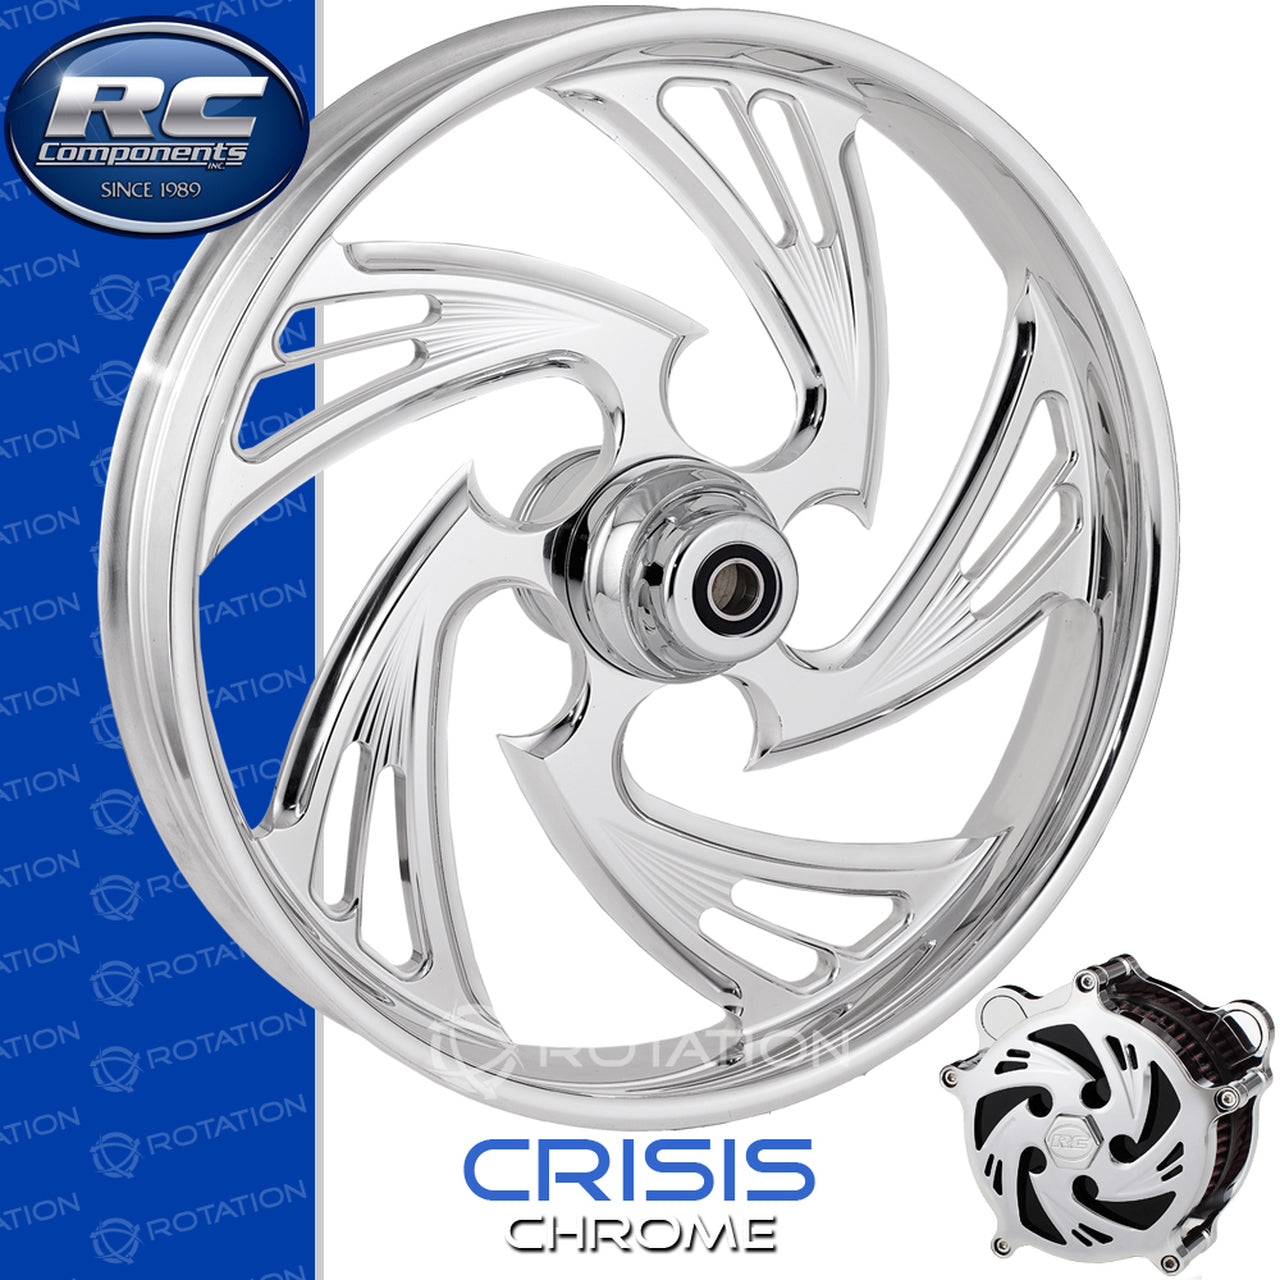 RC Components Crisis Chrome Touring Wheel